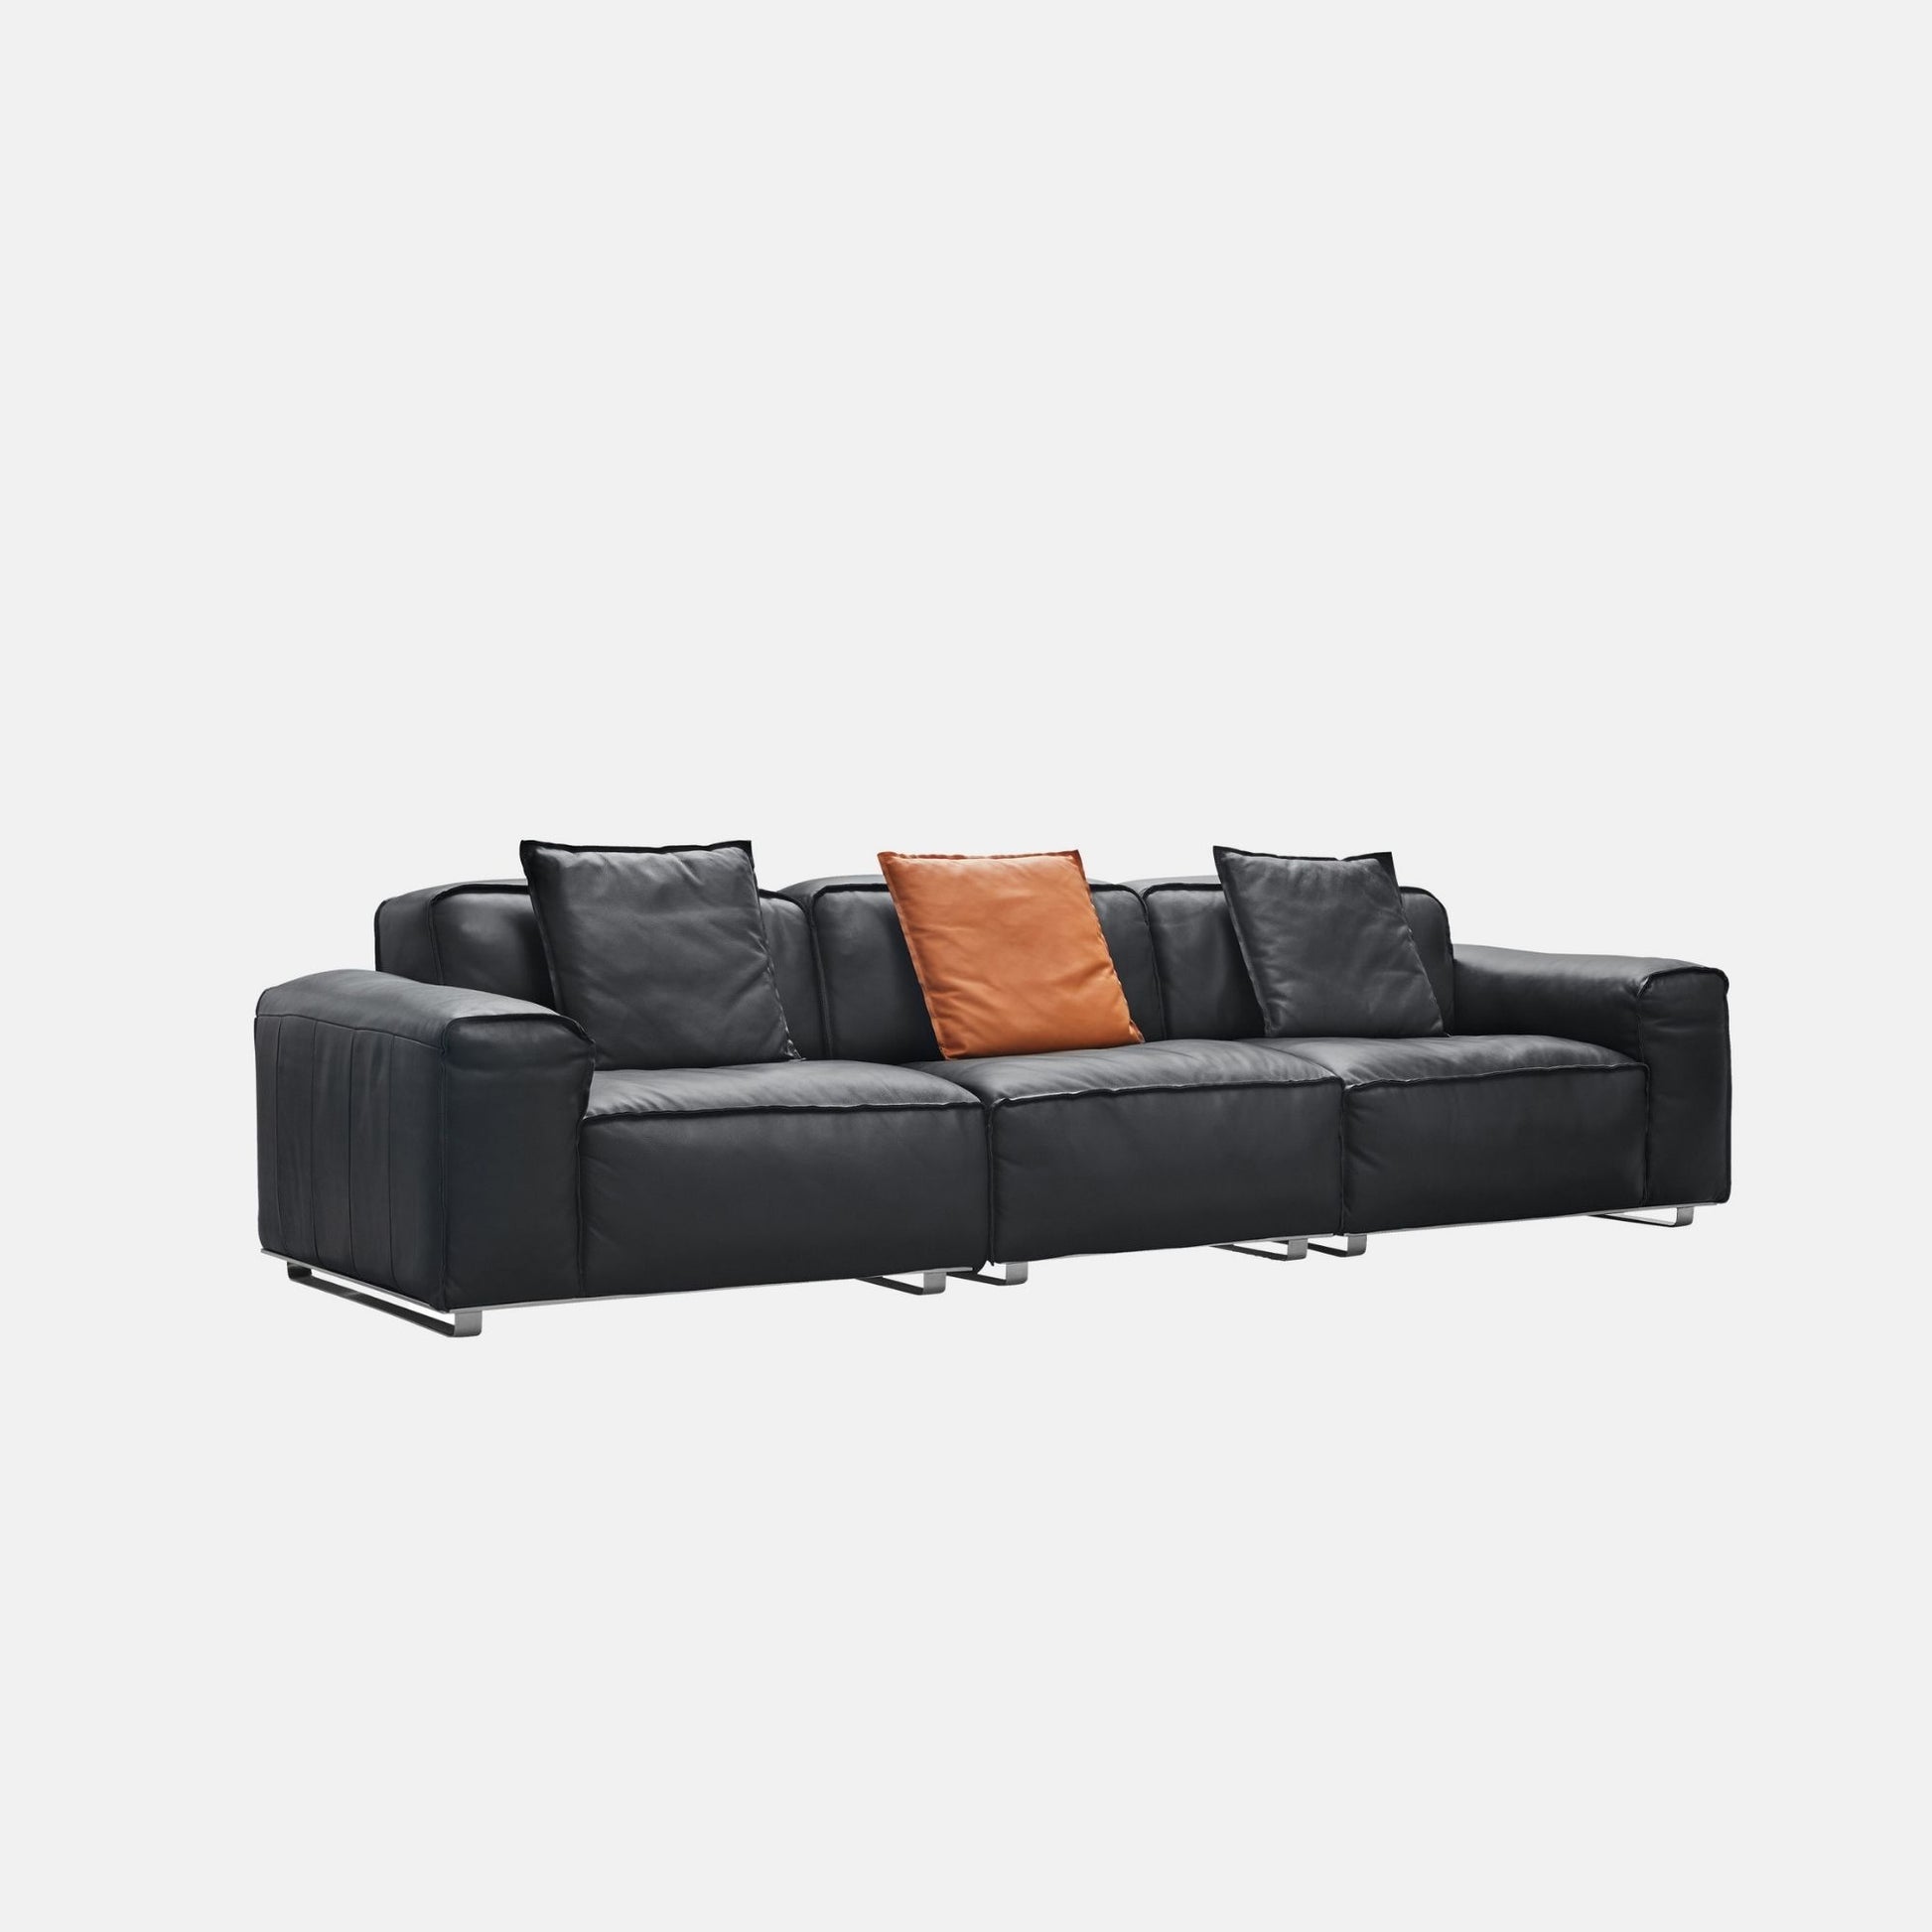 Colby black top grain half leather 3 seat sofa